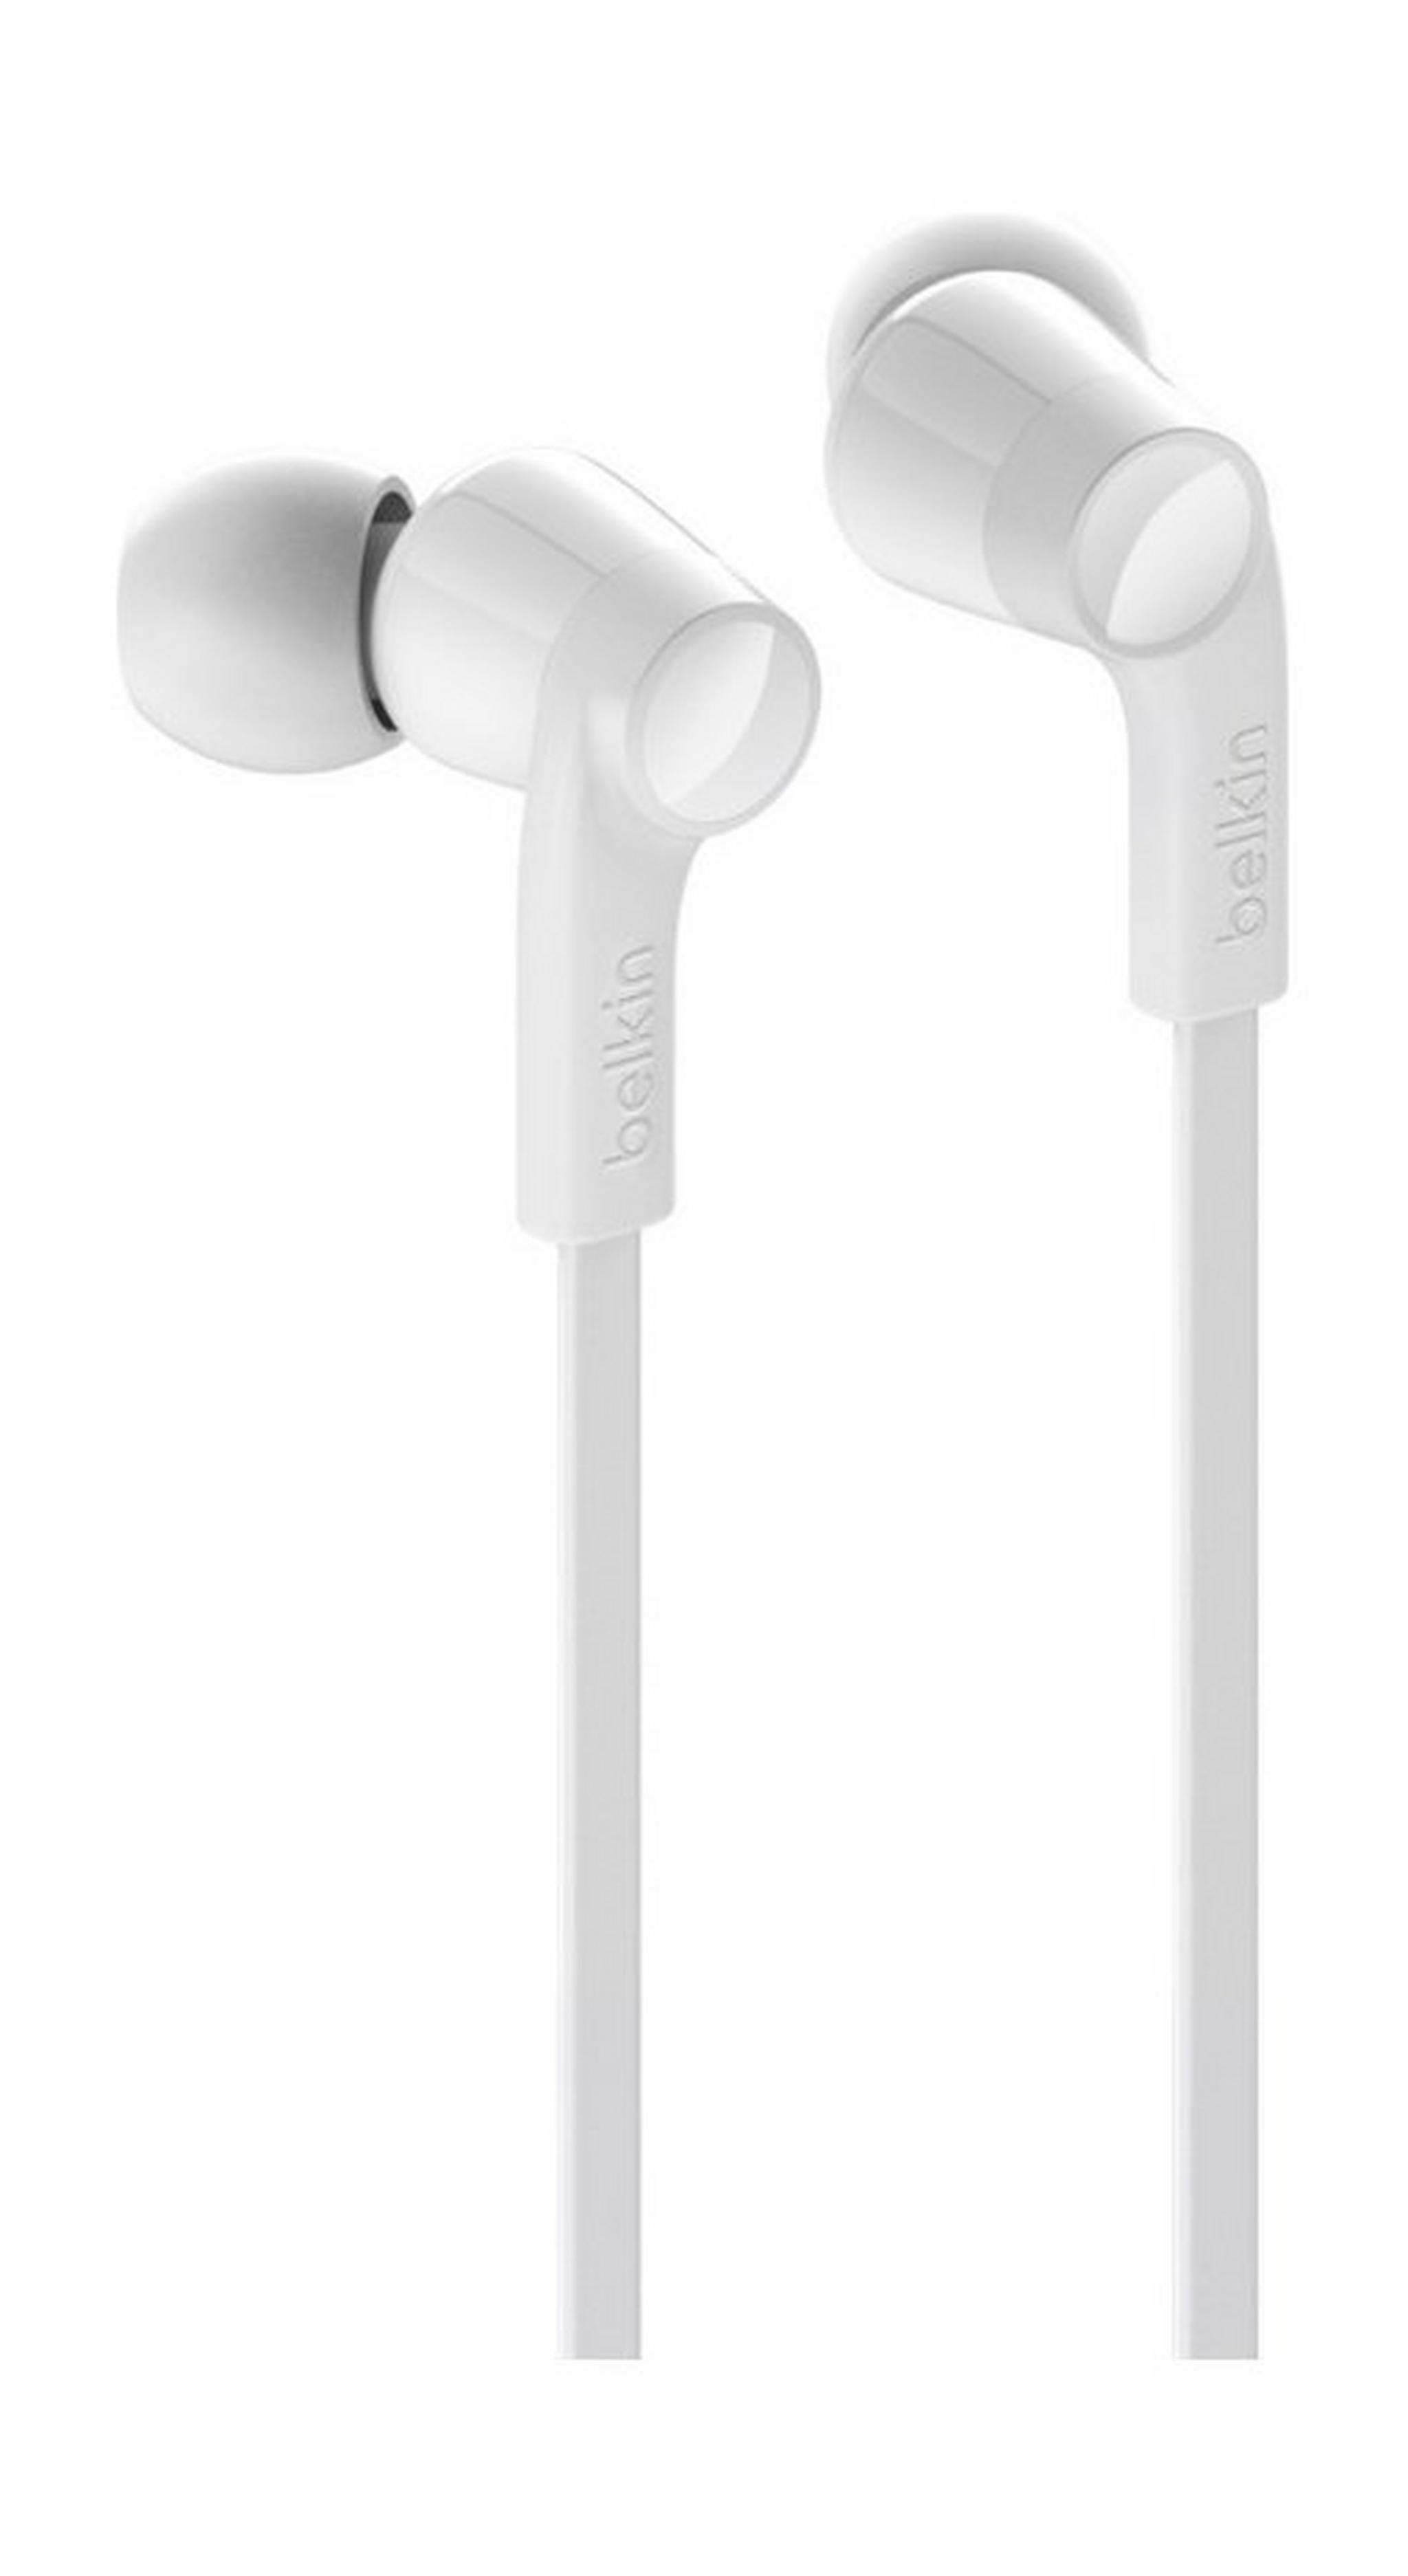 Belkin Rockstar Headphones with USB-C Connector - White